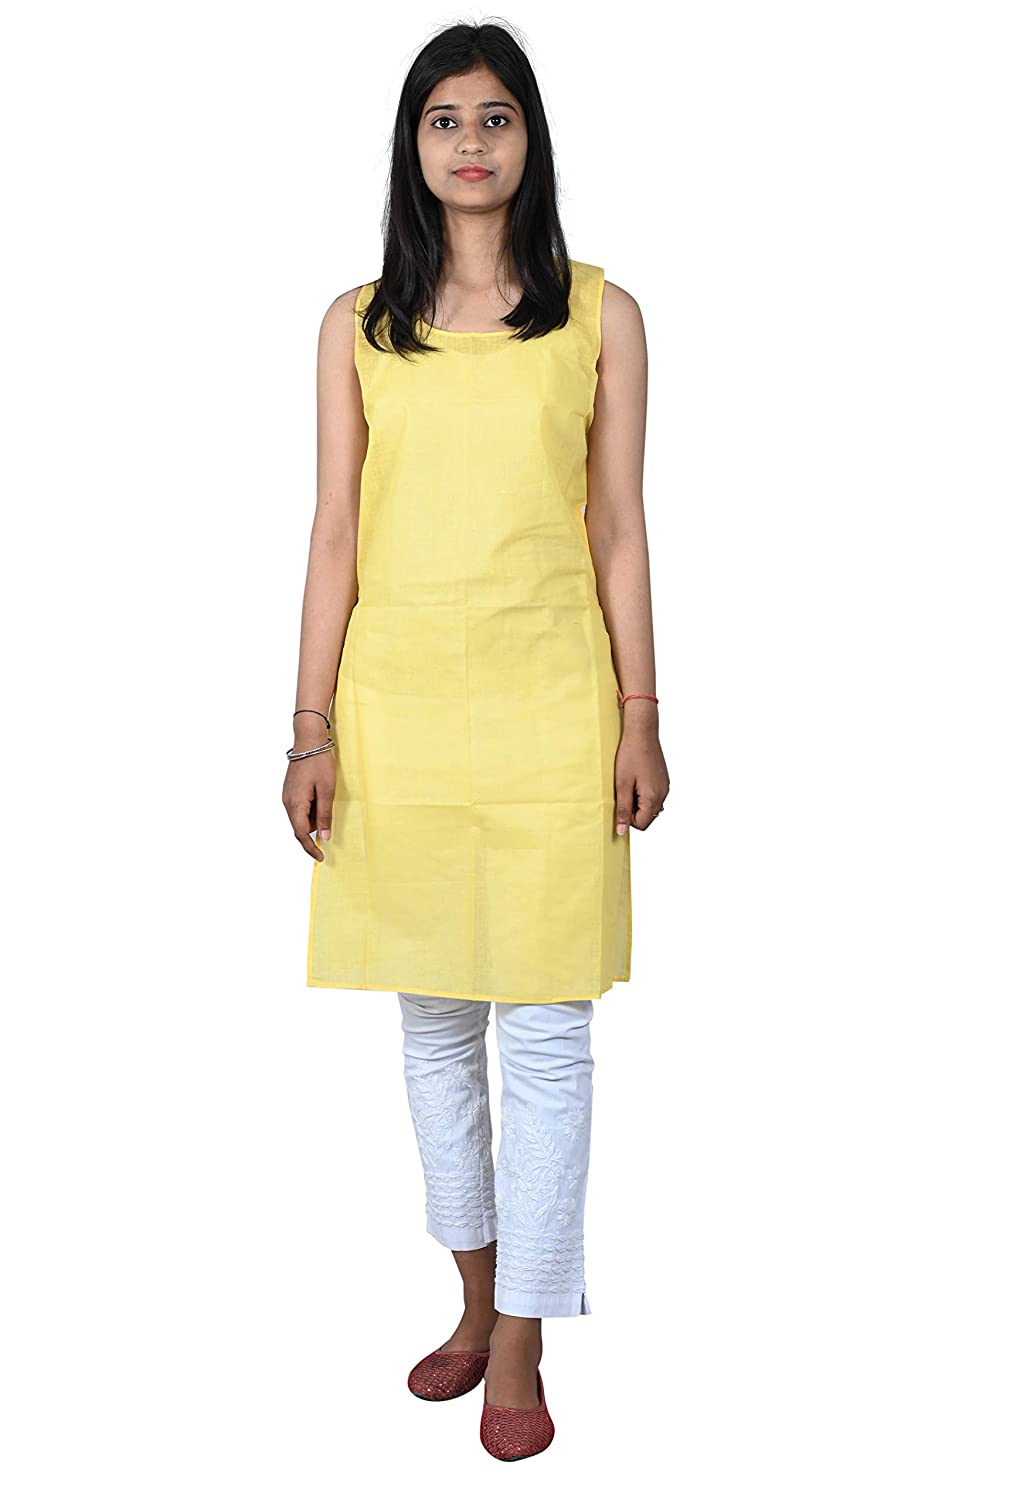 Lavangi Yellow Cotton Camisoles